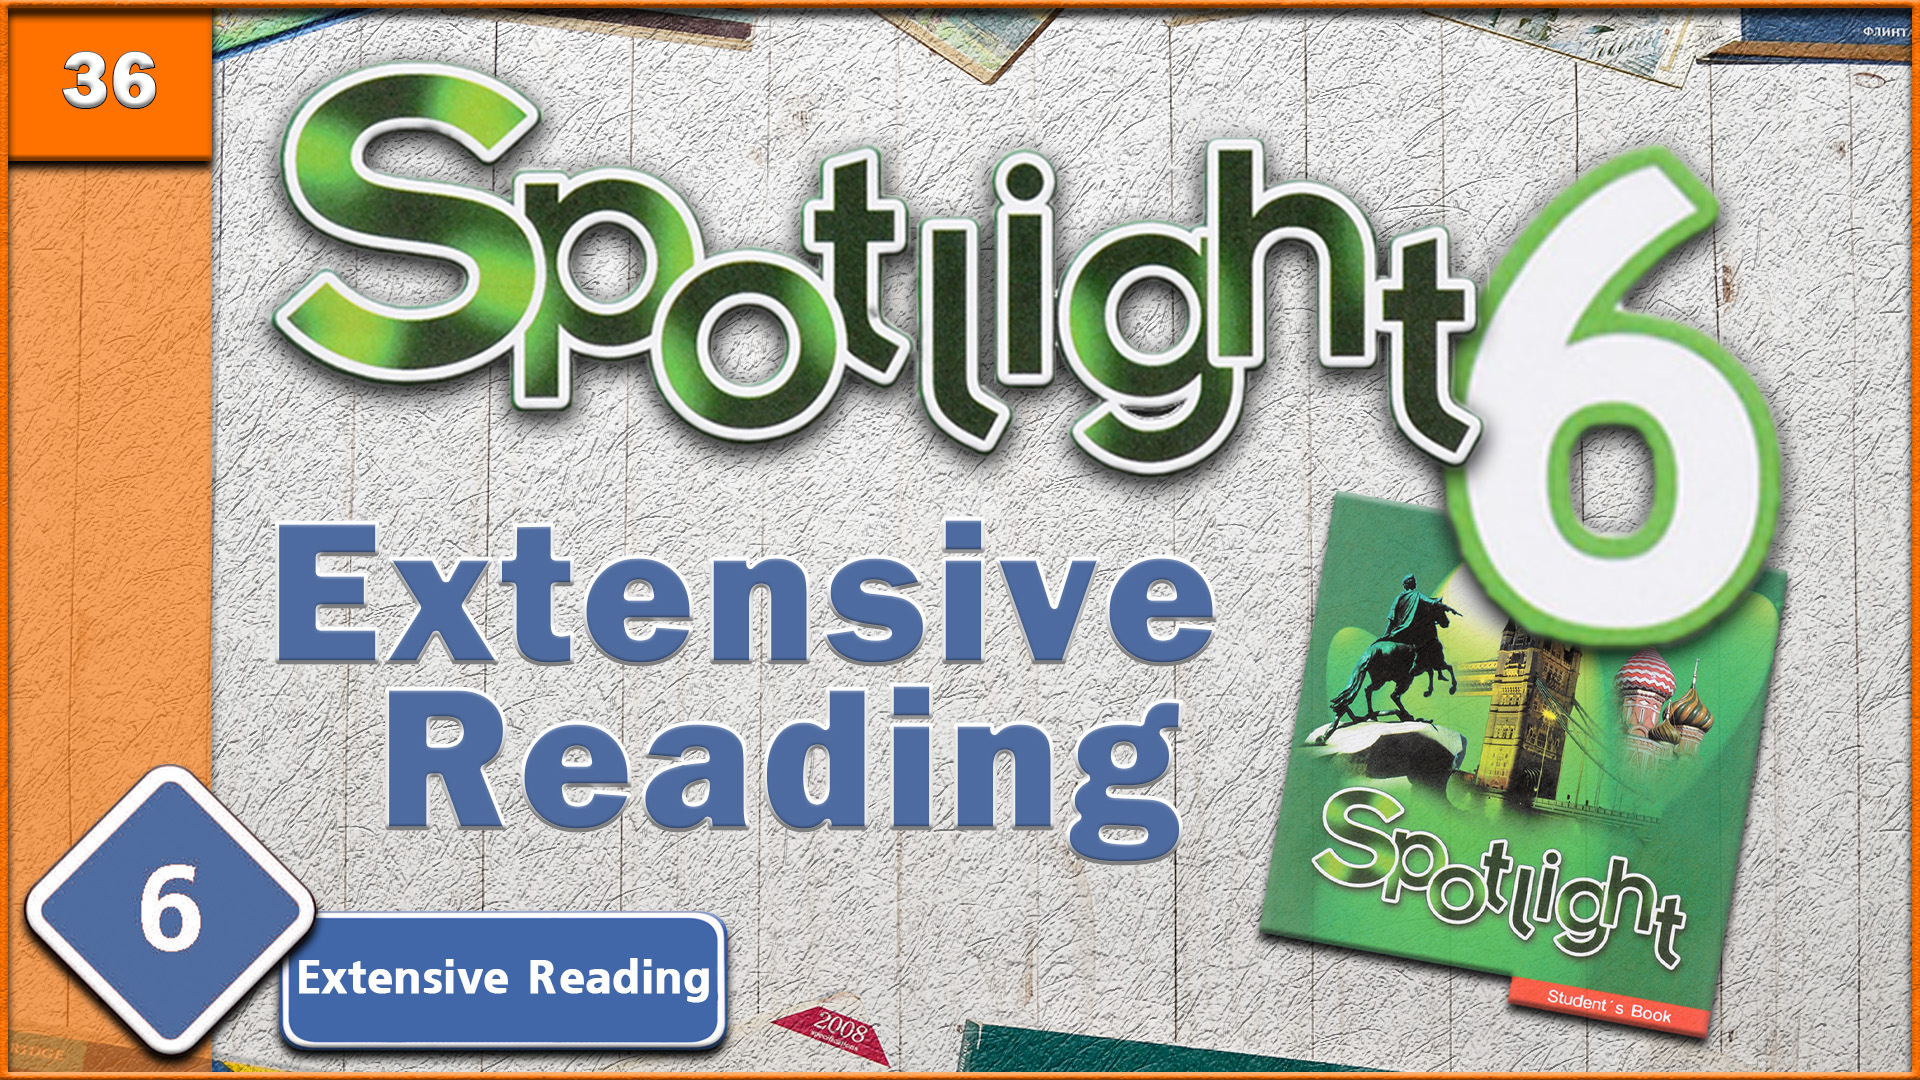 Extensive reading 6. Spotlight 5 extensive reading 5. Spotlight 6 модуль 6 extensive reading. Extensive reading. Spotlight 6 обложка.